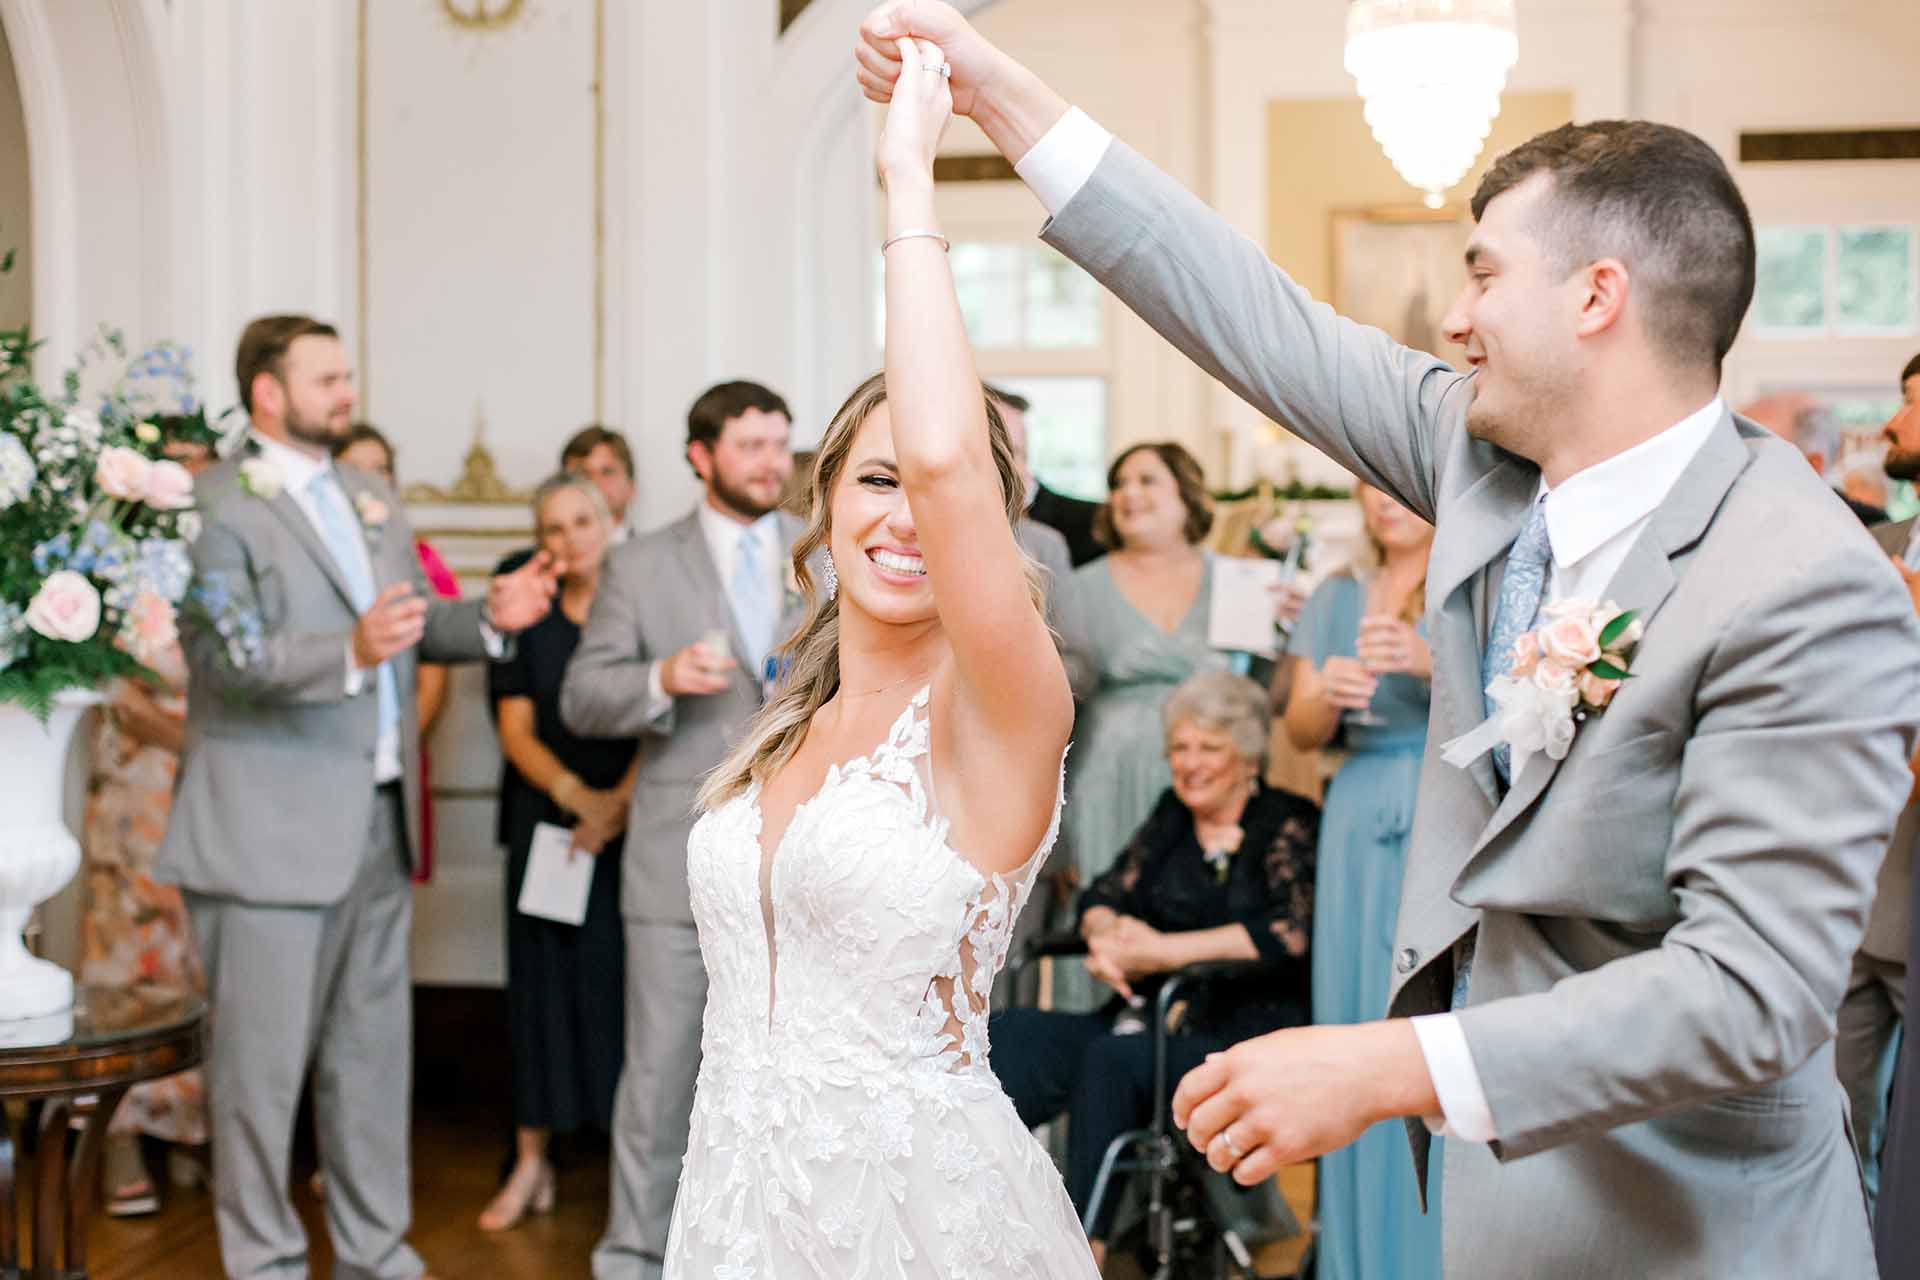 A couple dancing at their wedding, hosted at Truitt Vanderbilt Club.